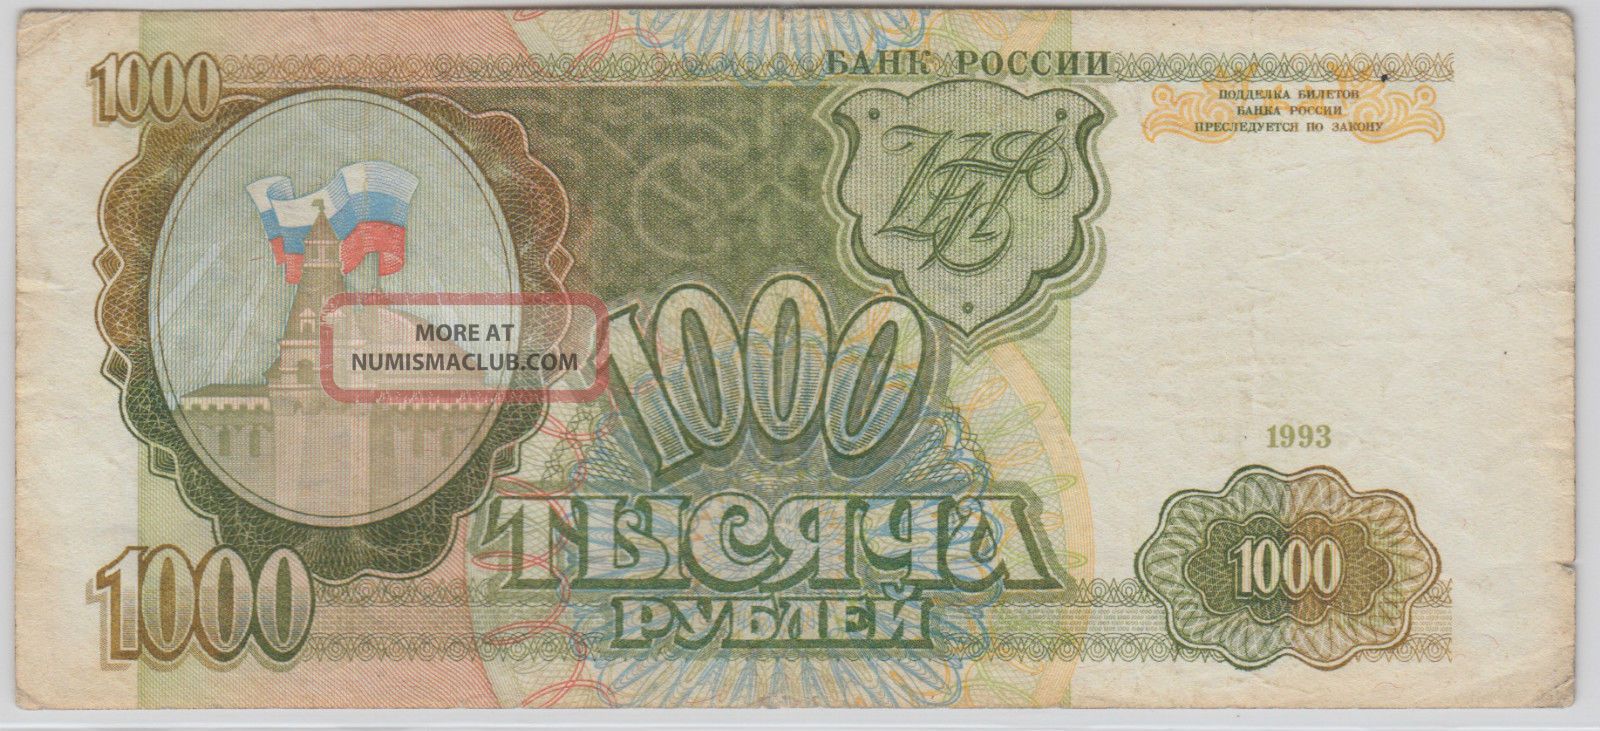 Russia - БАНКРОССИИ 1993 Issue 1000 Rubles Pick 257 Europe photo